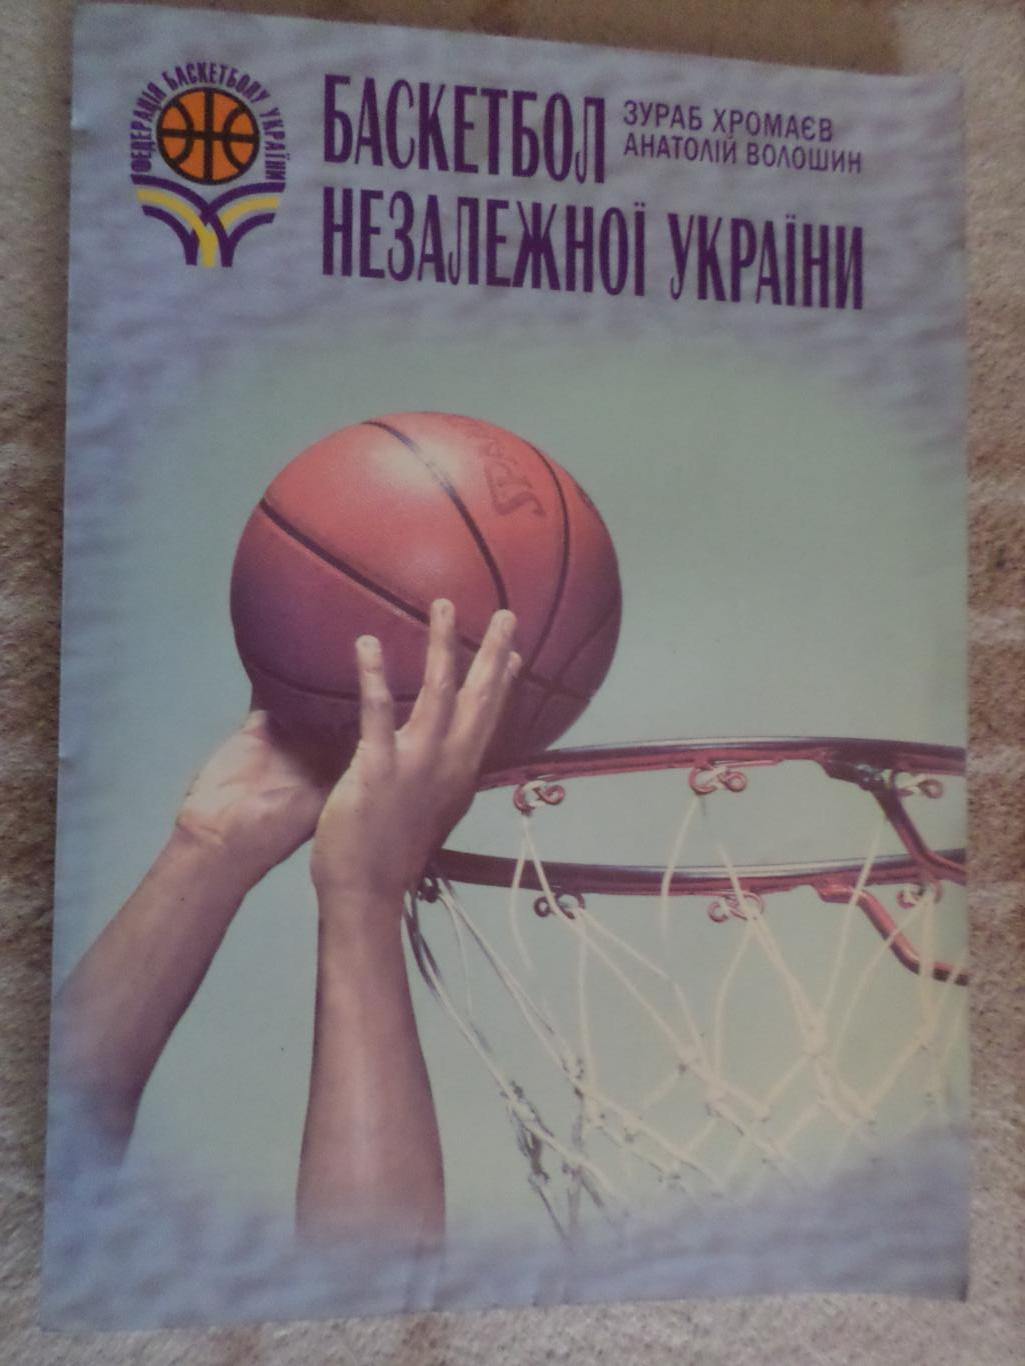 Хромаев, Волошин - Баскетбол незалежної України 2006 г